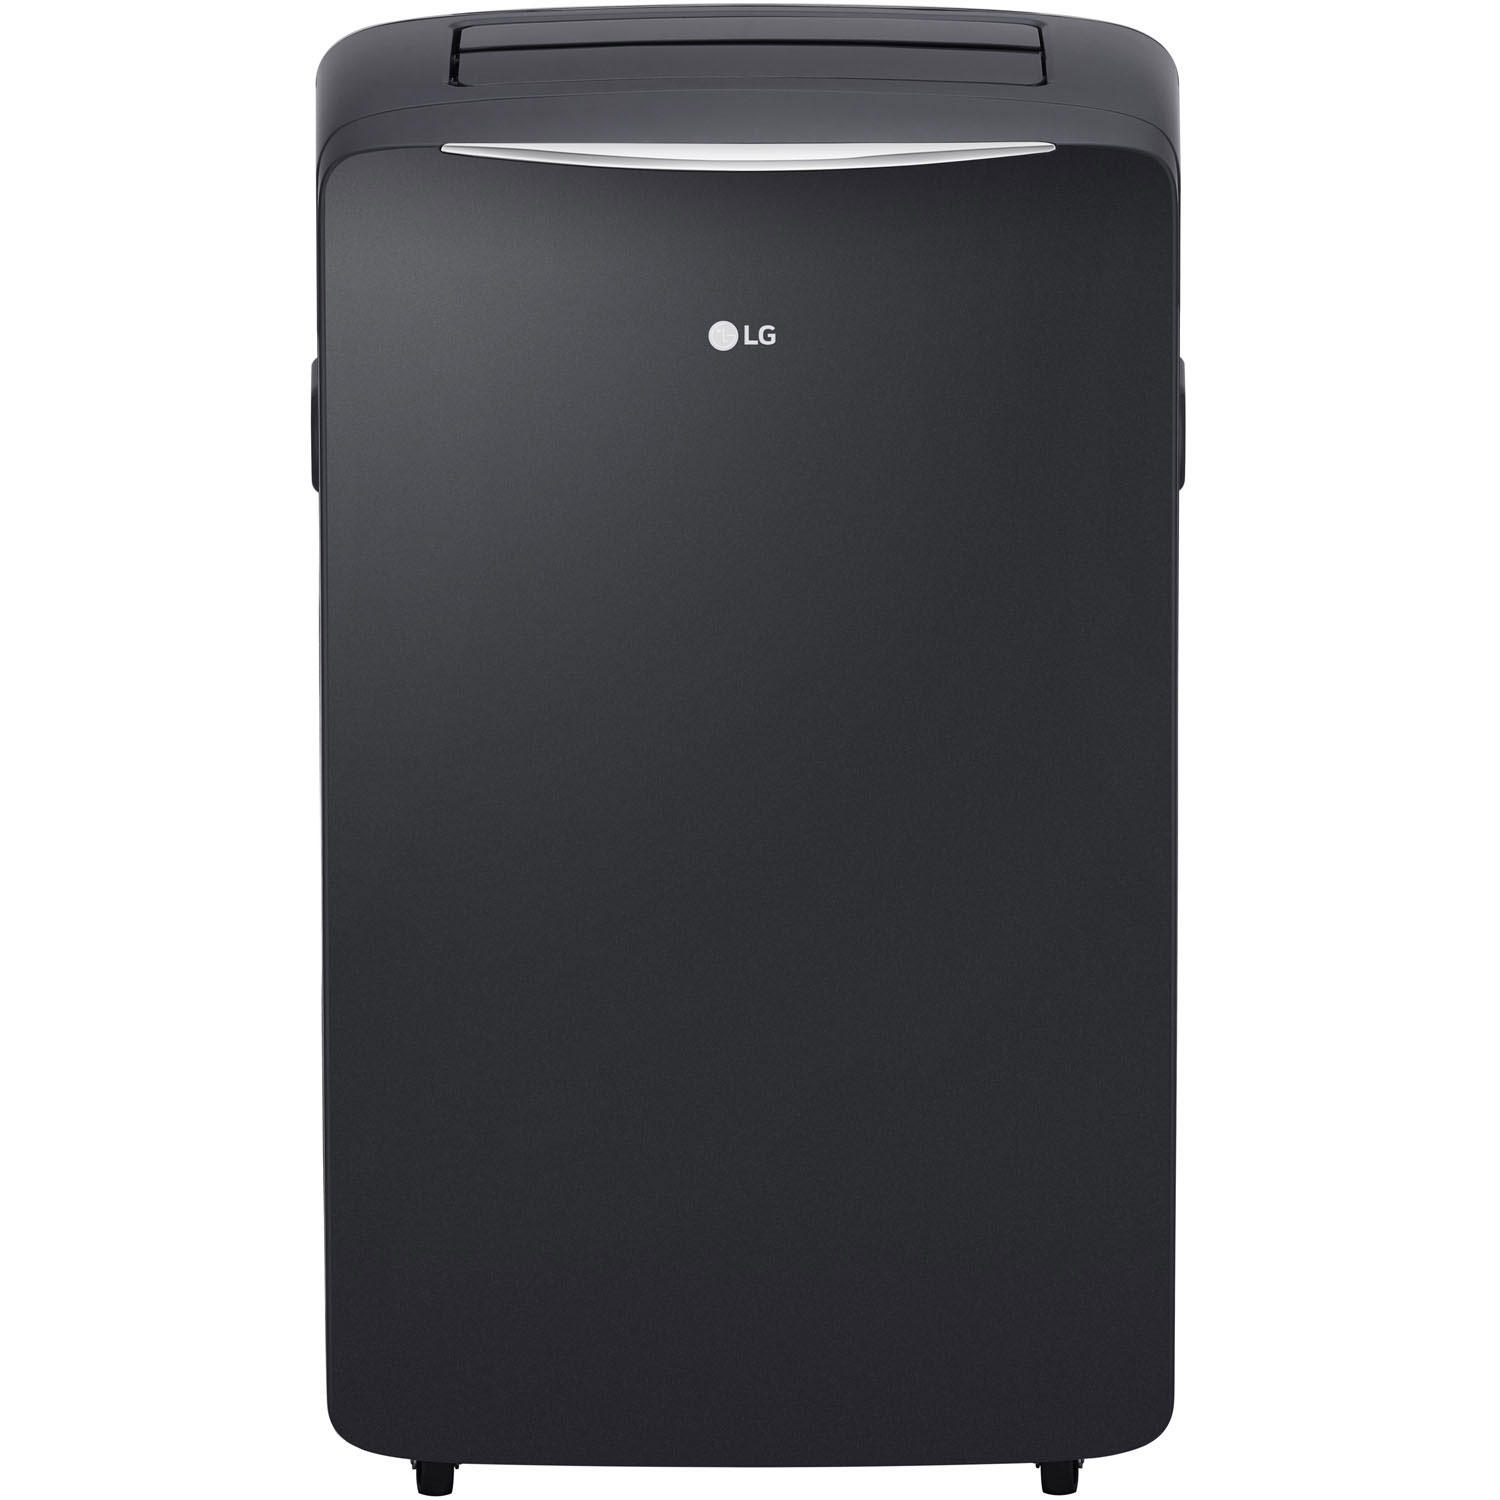 LG LP1417SHR 14,000 BTU 115V Portable Air Conditioner with 12,000 BTU Supplemental Heating